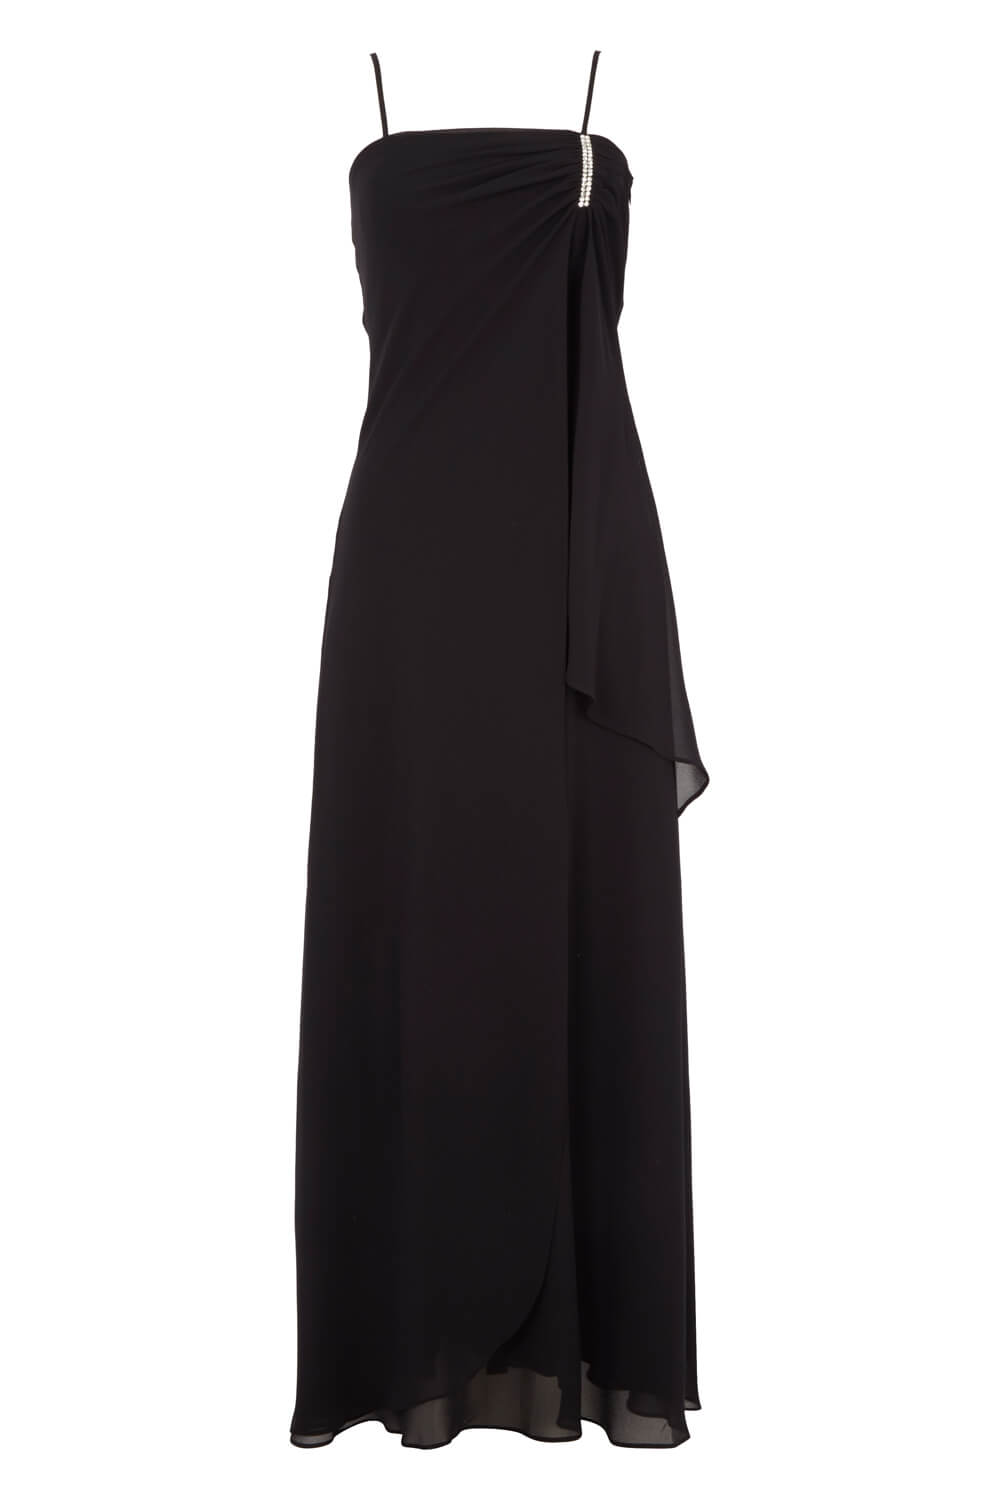 Embellished Chiffon Maxi Dress in Black - Roman Originals UK